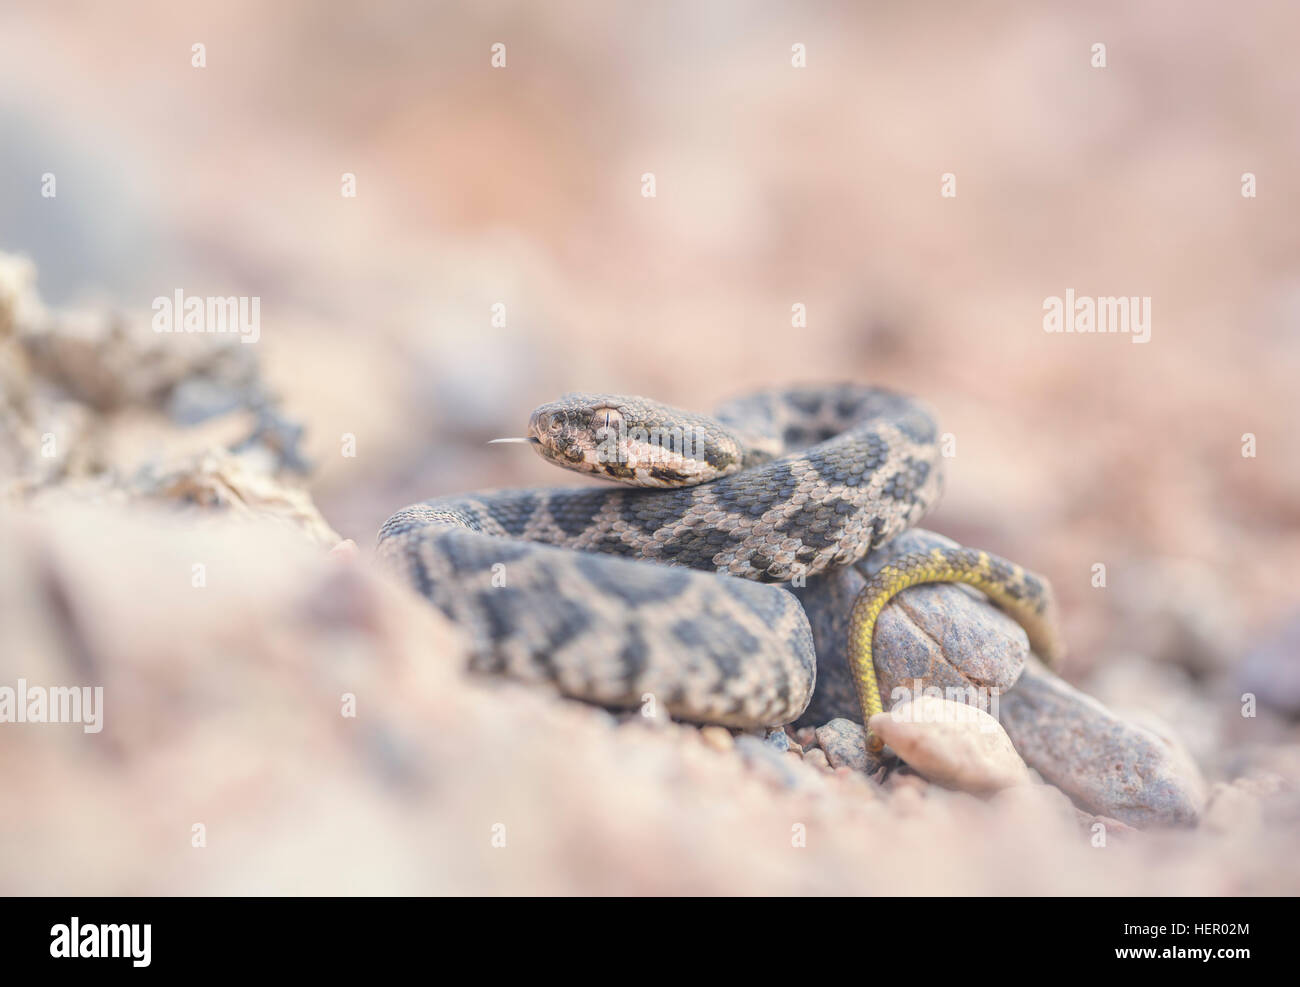 Young Moorish Viper snake (Daboia mauritanica) hidden among rocks, Morocco Stock Photo